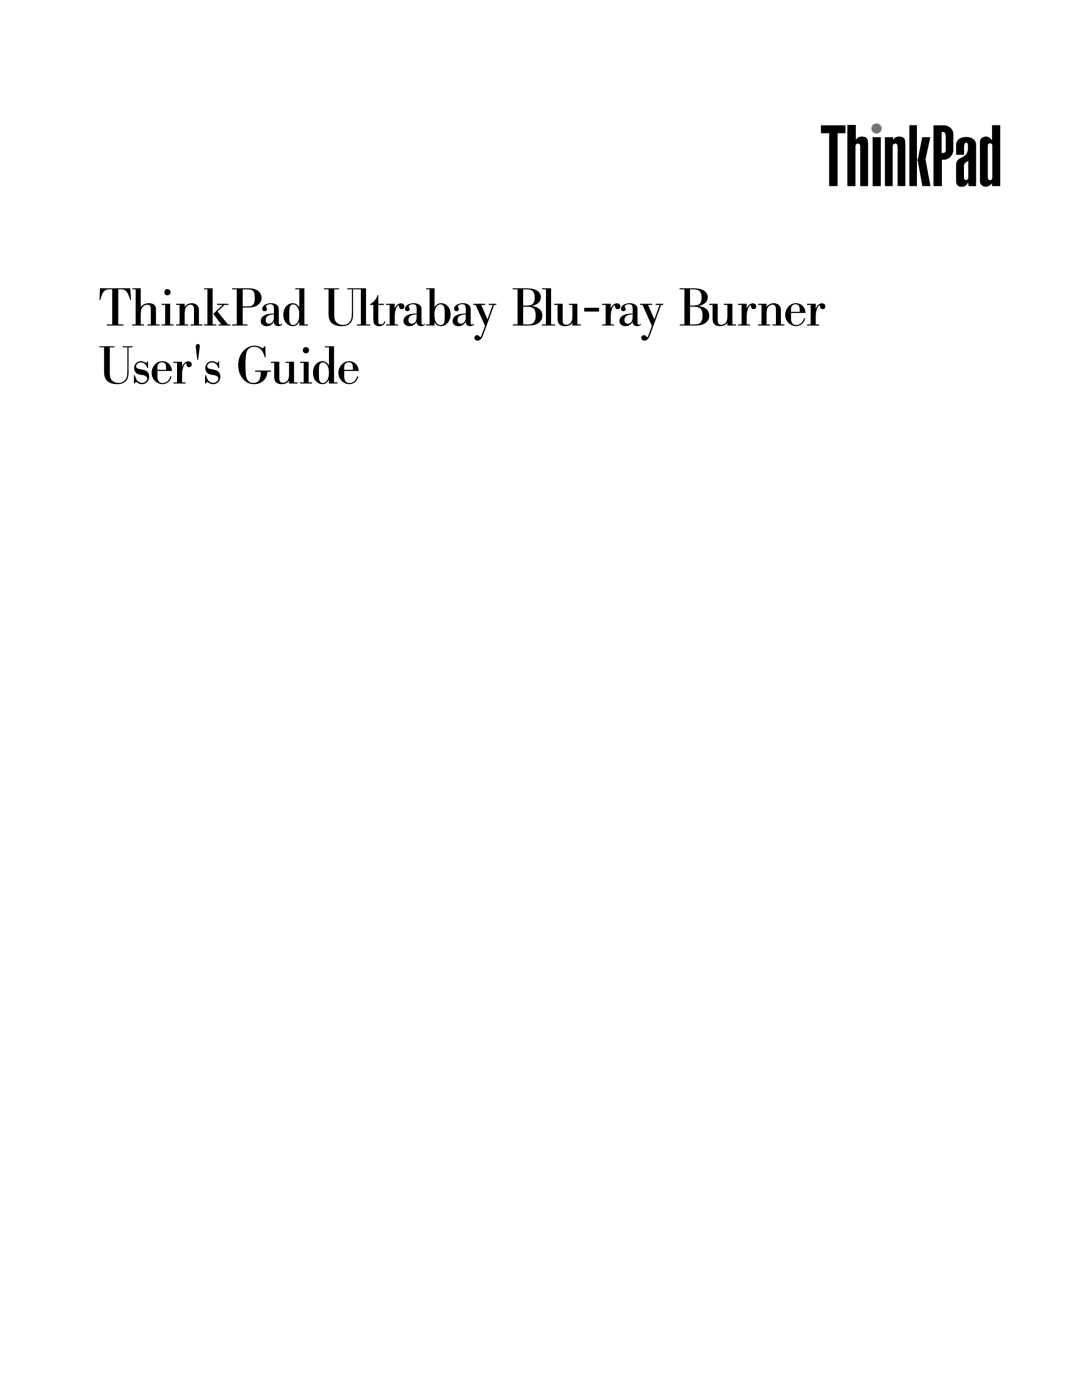 Lenovo 43N3201 manual ThinkPad Ultrabay Blu-rayBurner Users Guide 